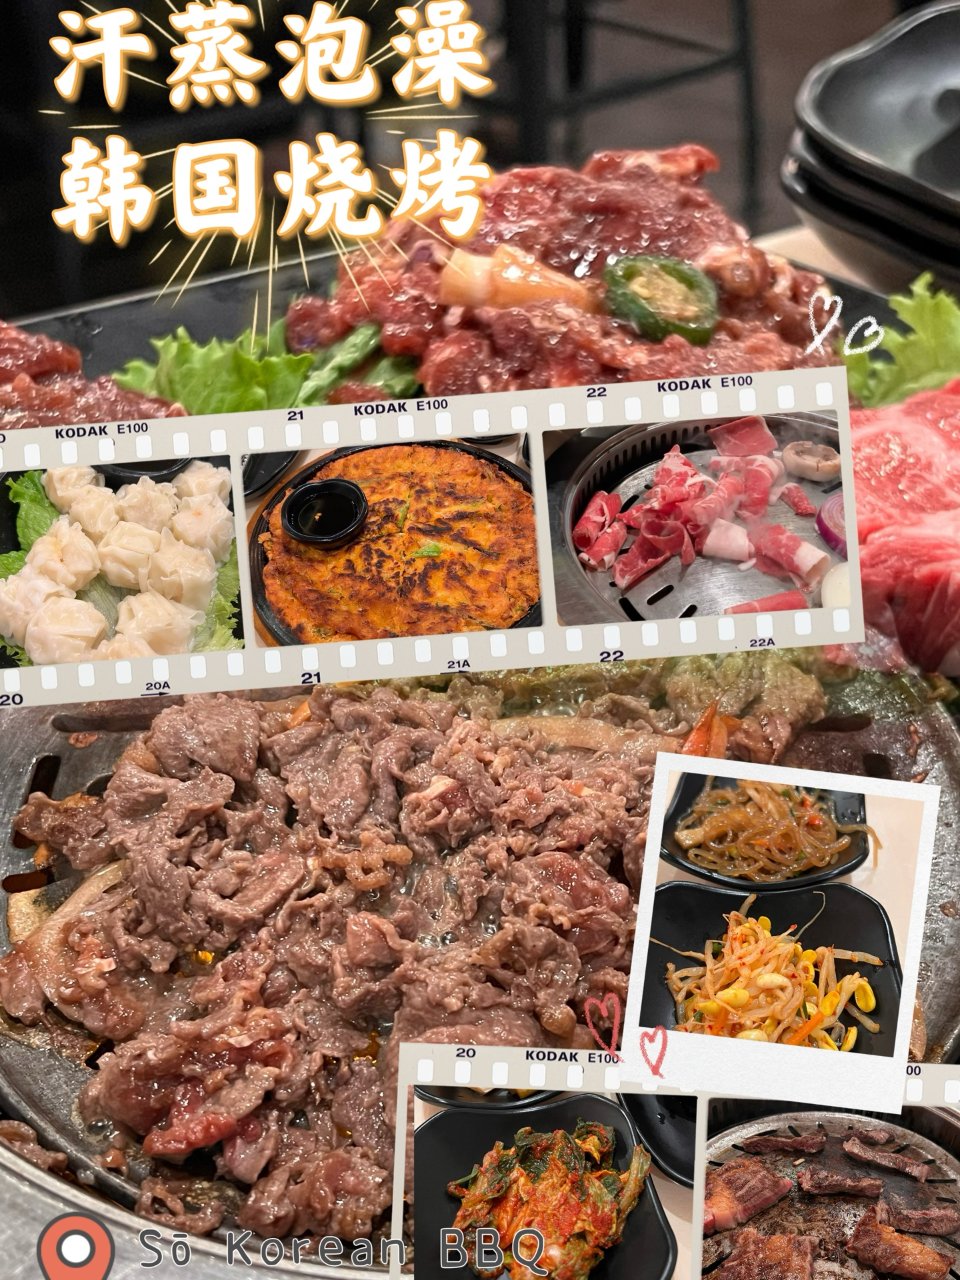 Sō Korean BBQ